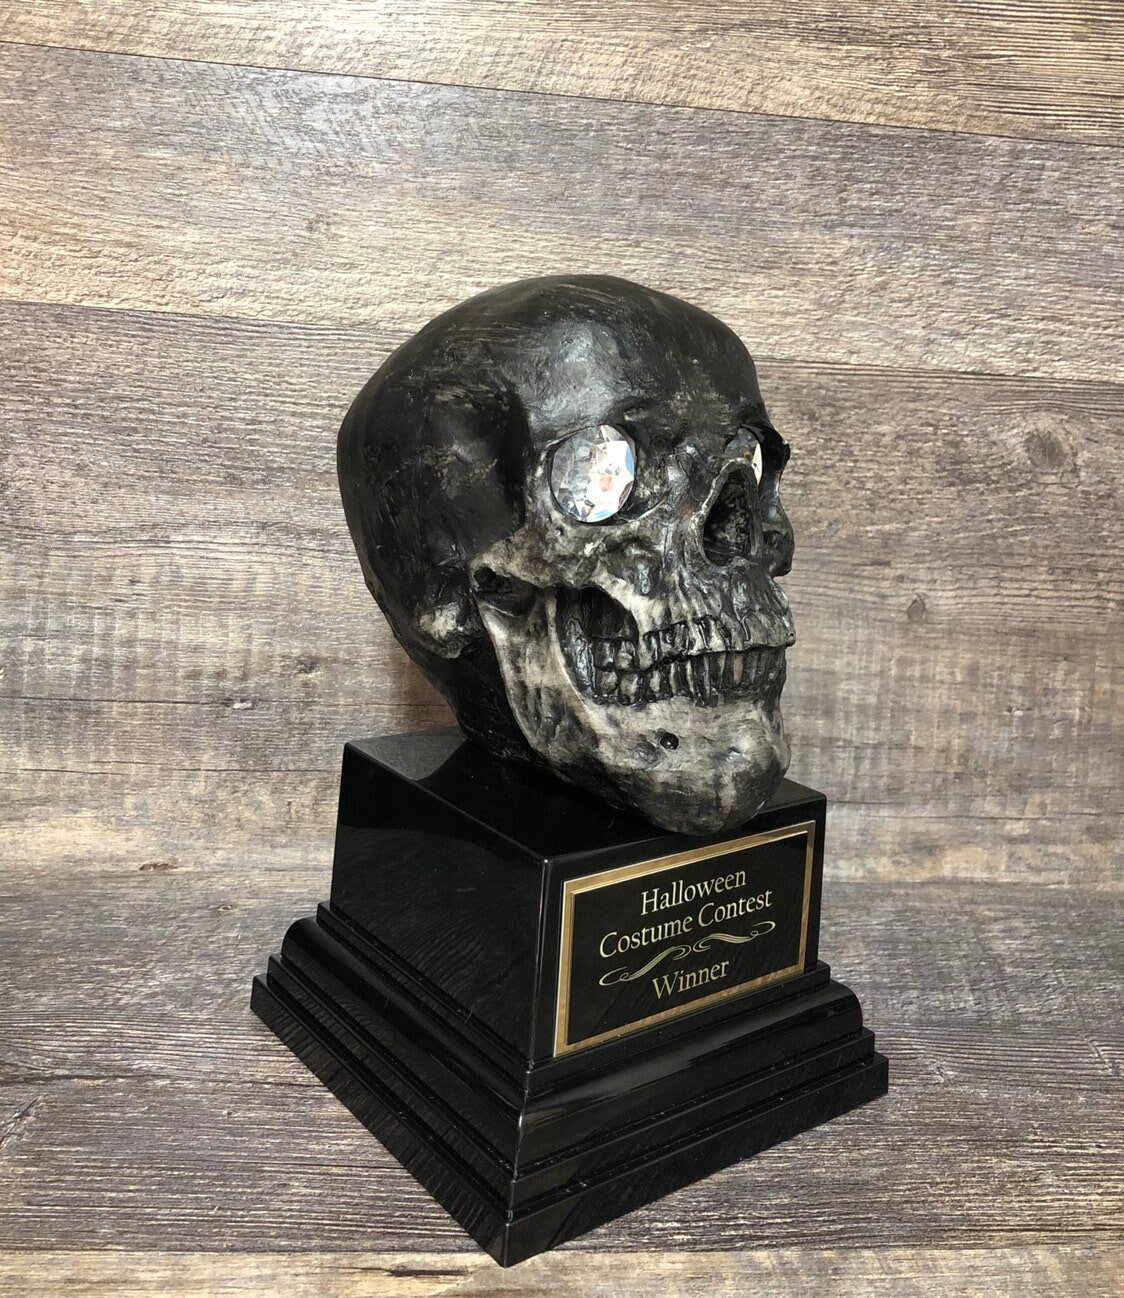 Halloween Trophy Black Skull w/ Diamond Eye Skulls Scariest Costume Contest Skeleton Pumpkin Carving Contest Winner Halloween Decor